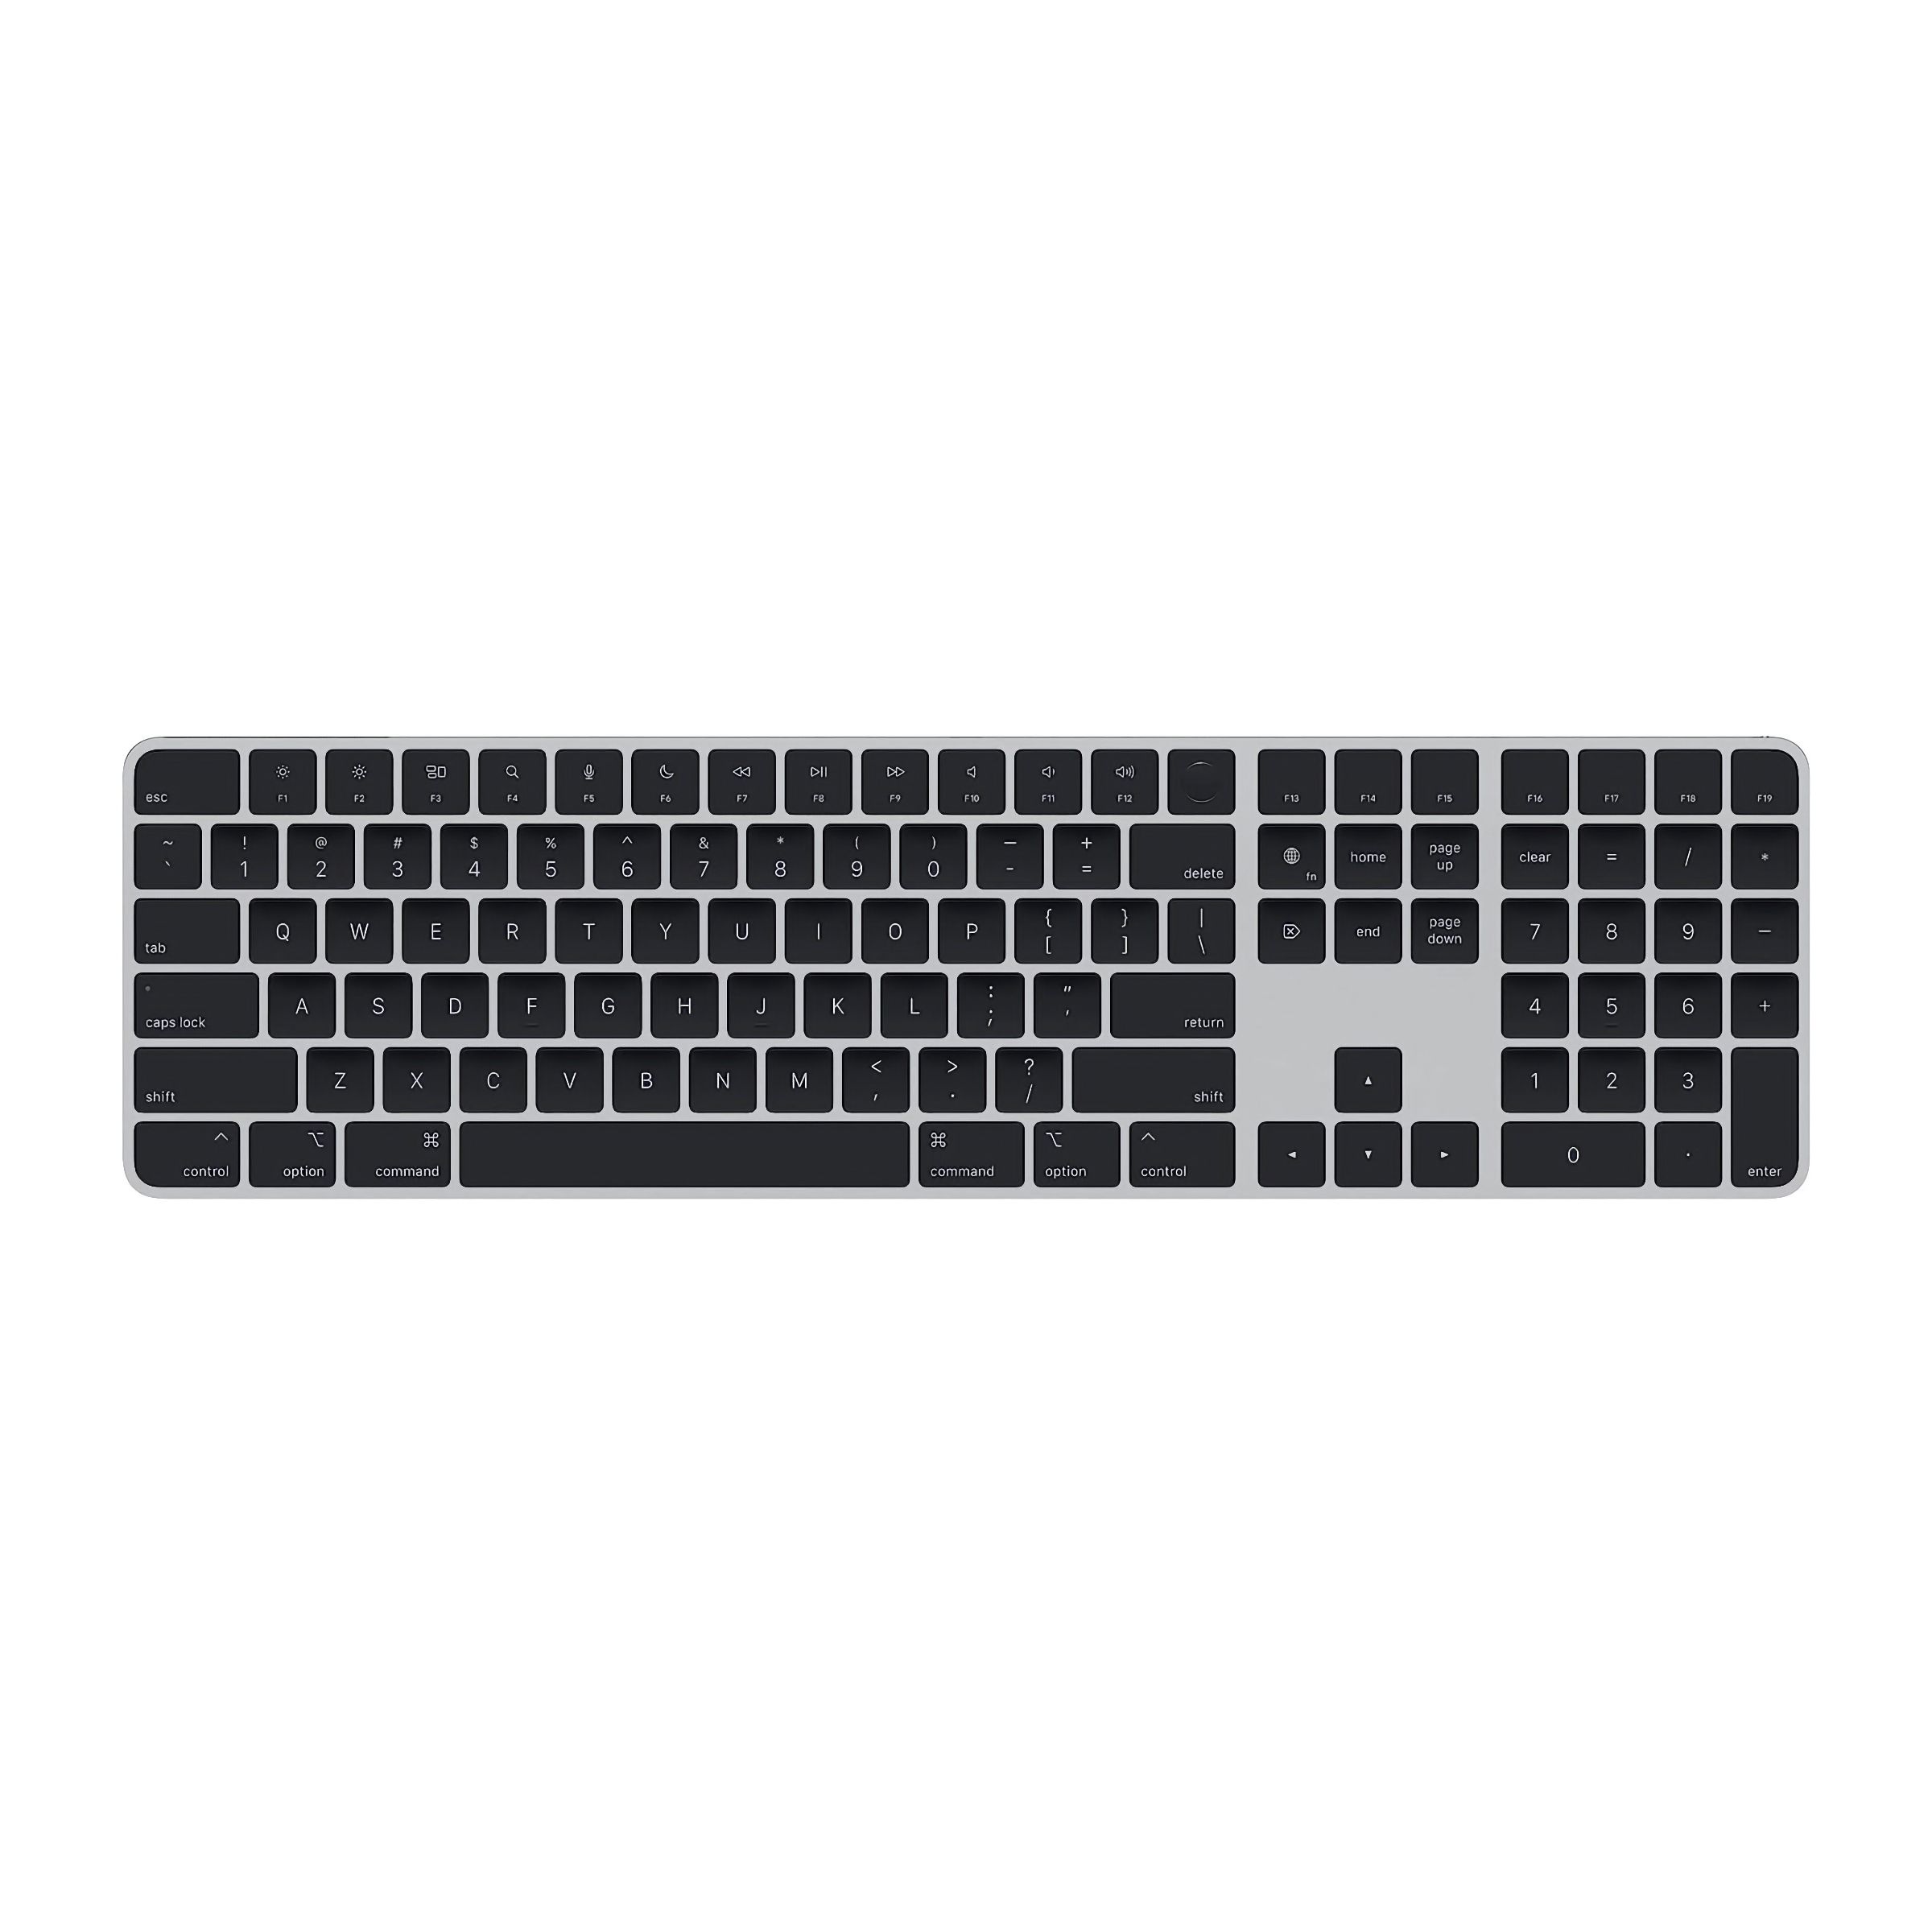 A silver keyboard with a keypad and black keys.